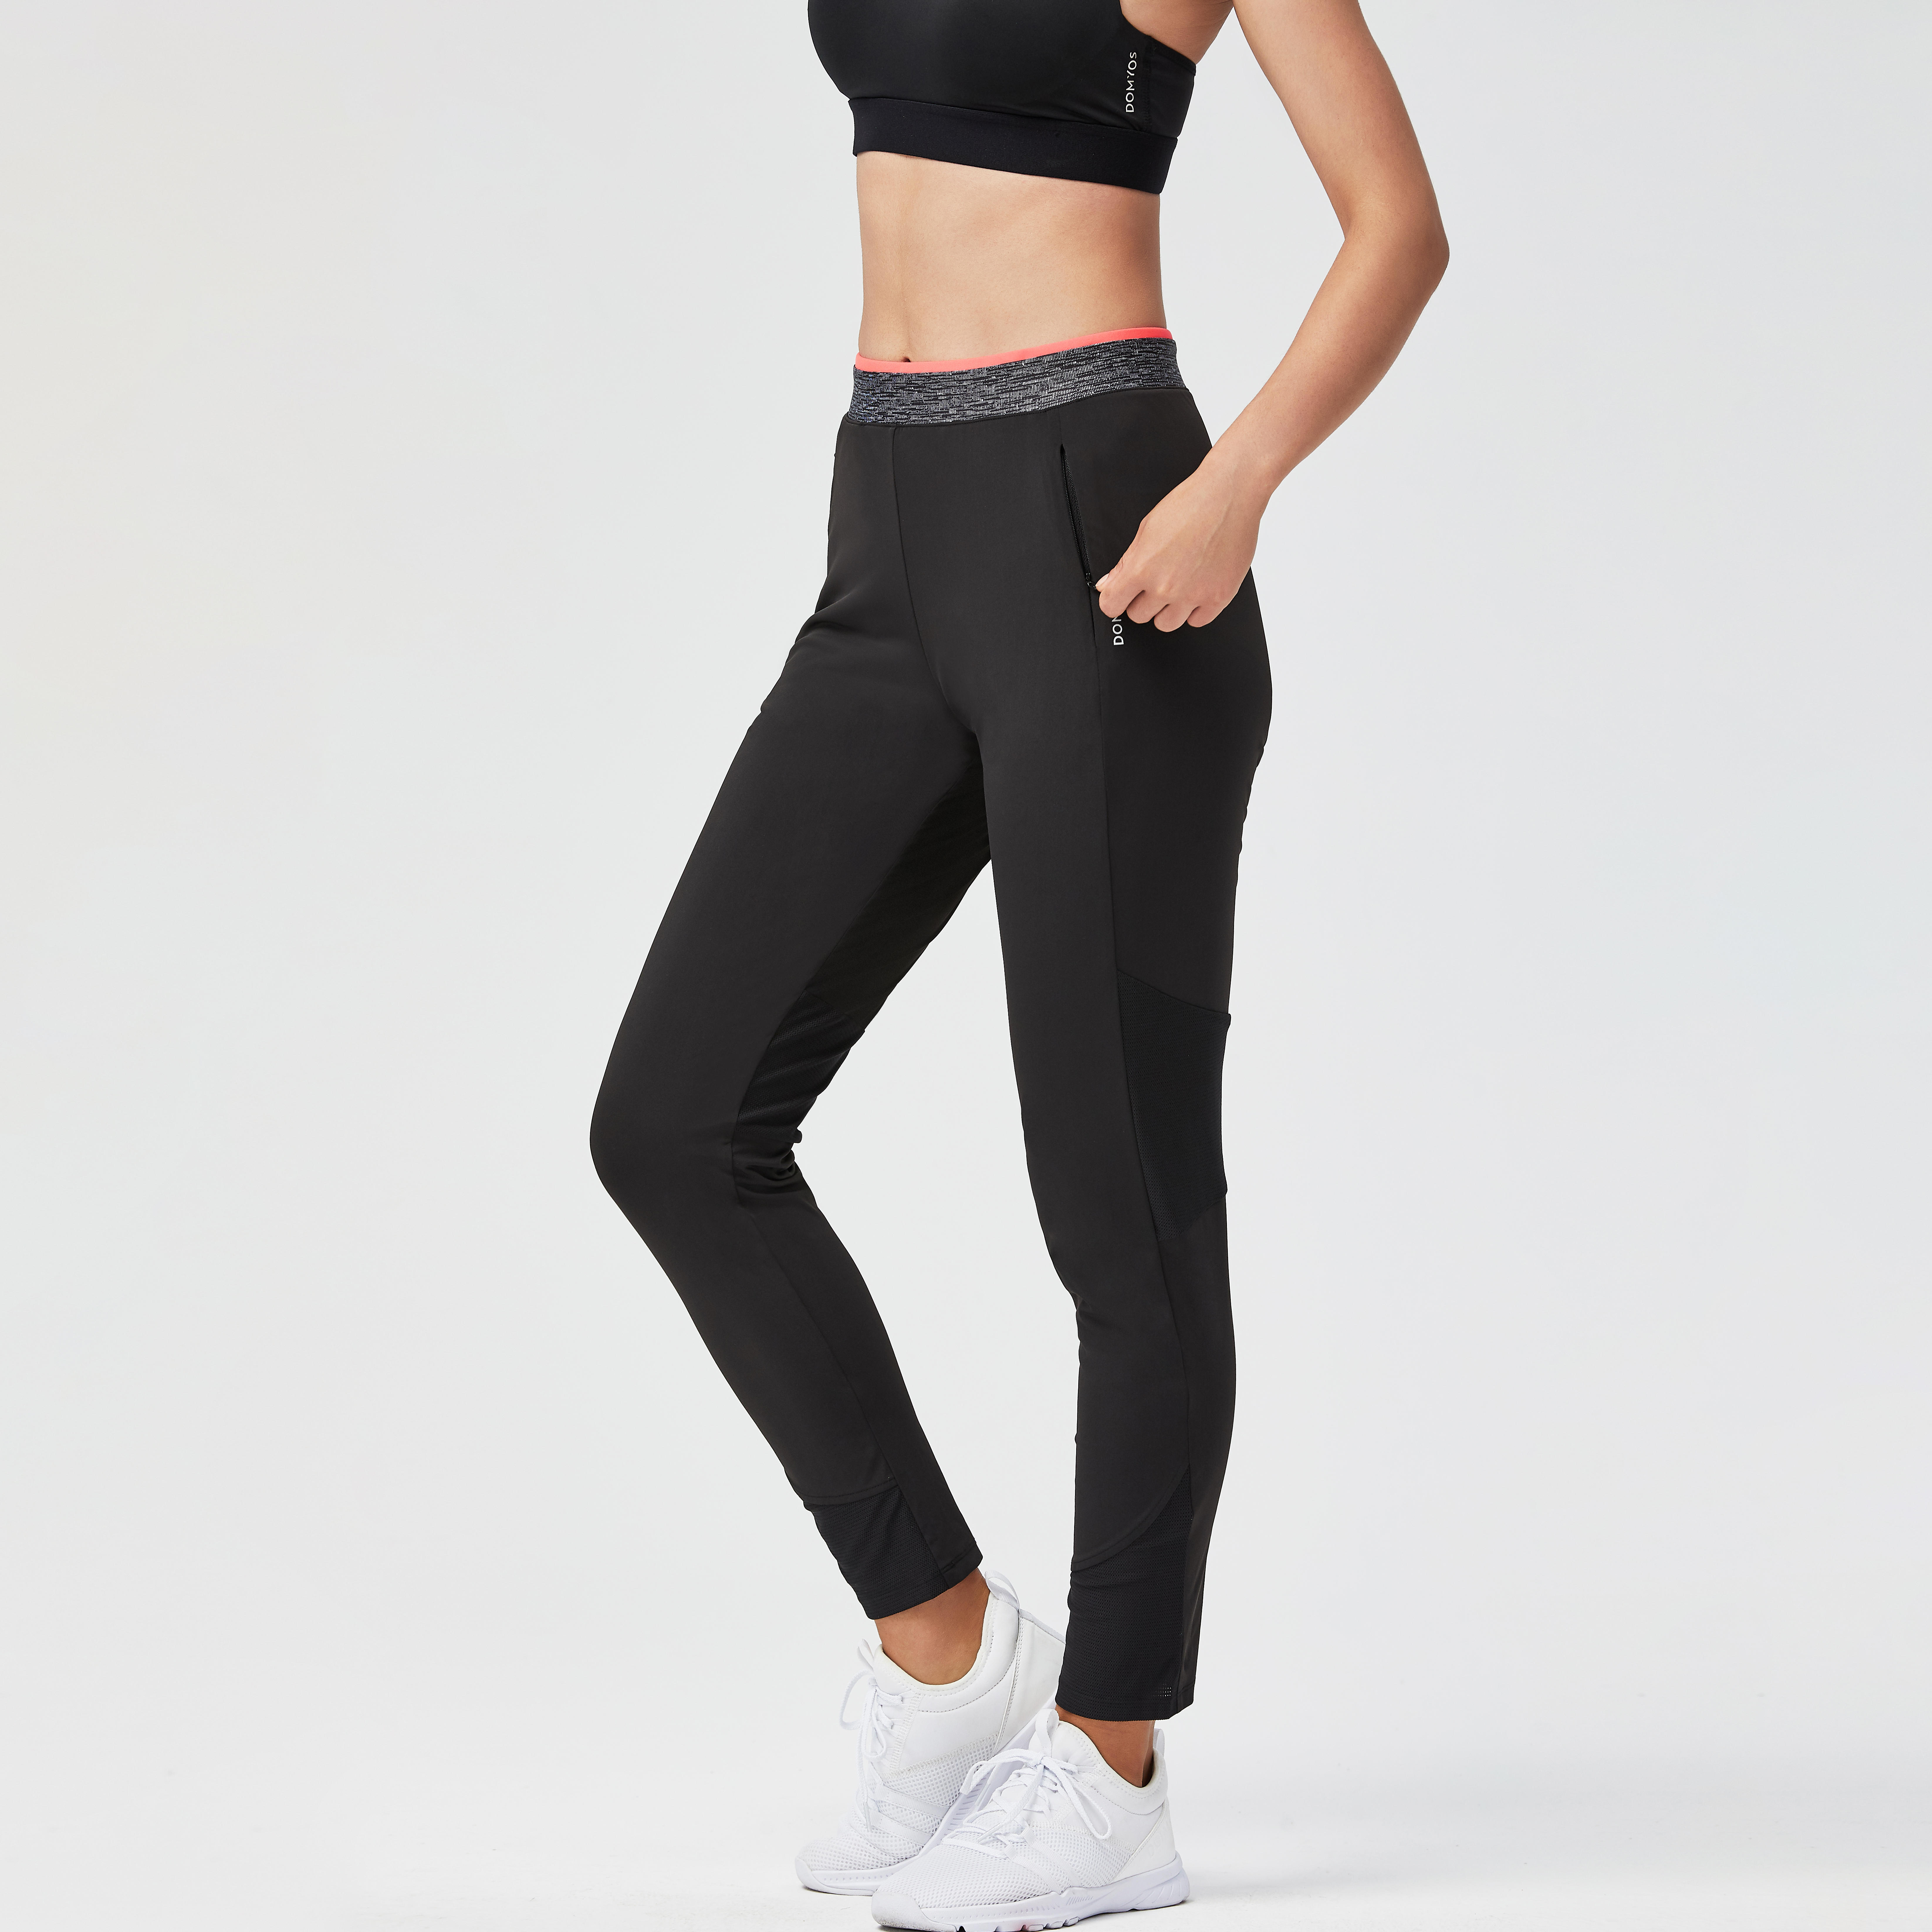 Buy Domyos by Decathlon Women Grey Pink Solid Regular fit Organic Cotton  Yoga Pants at Amazon.in